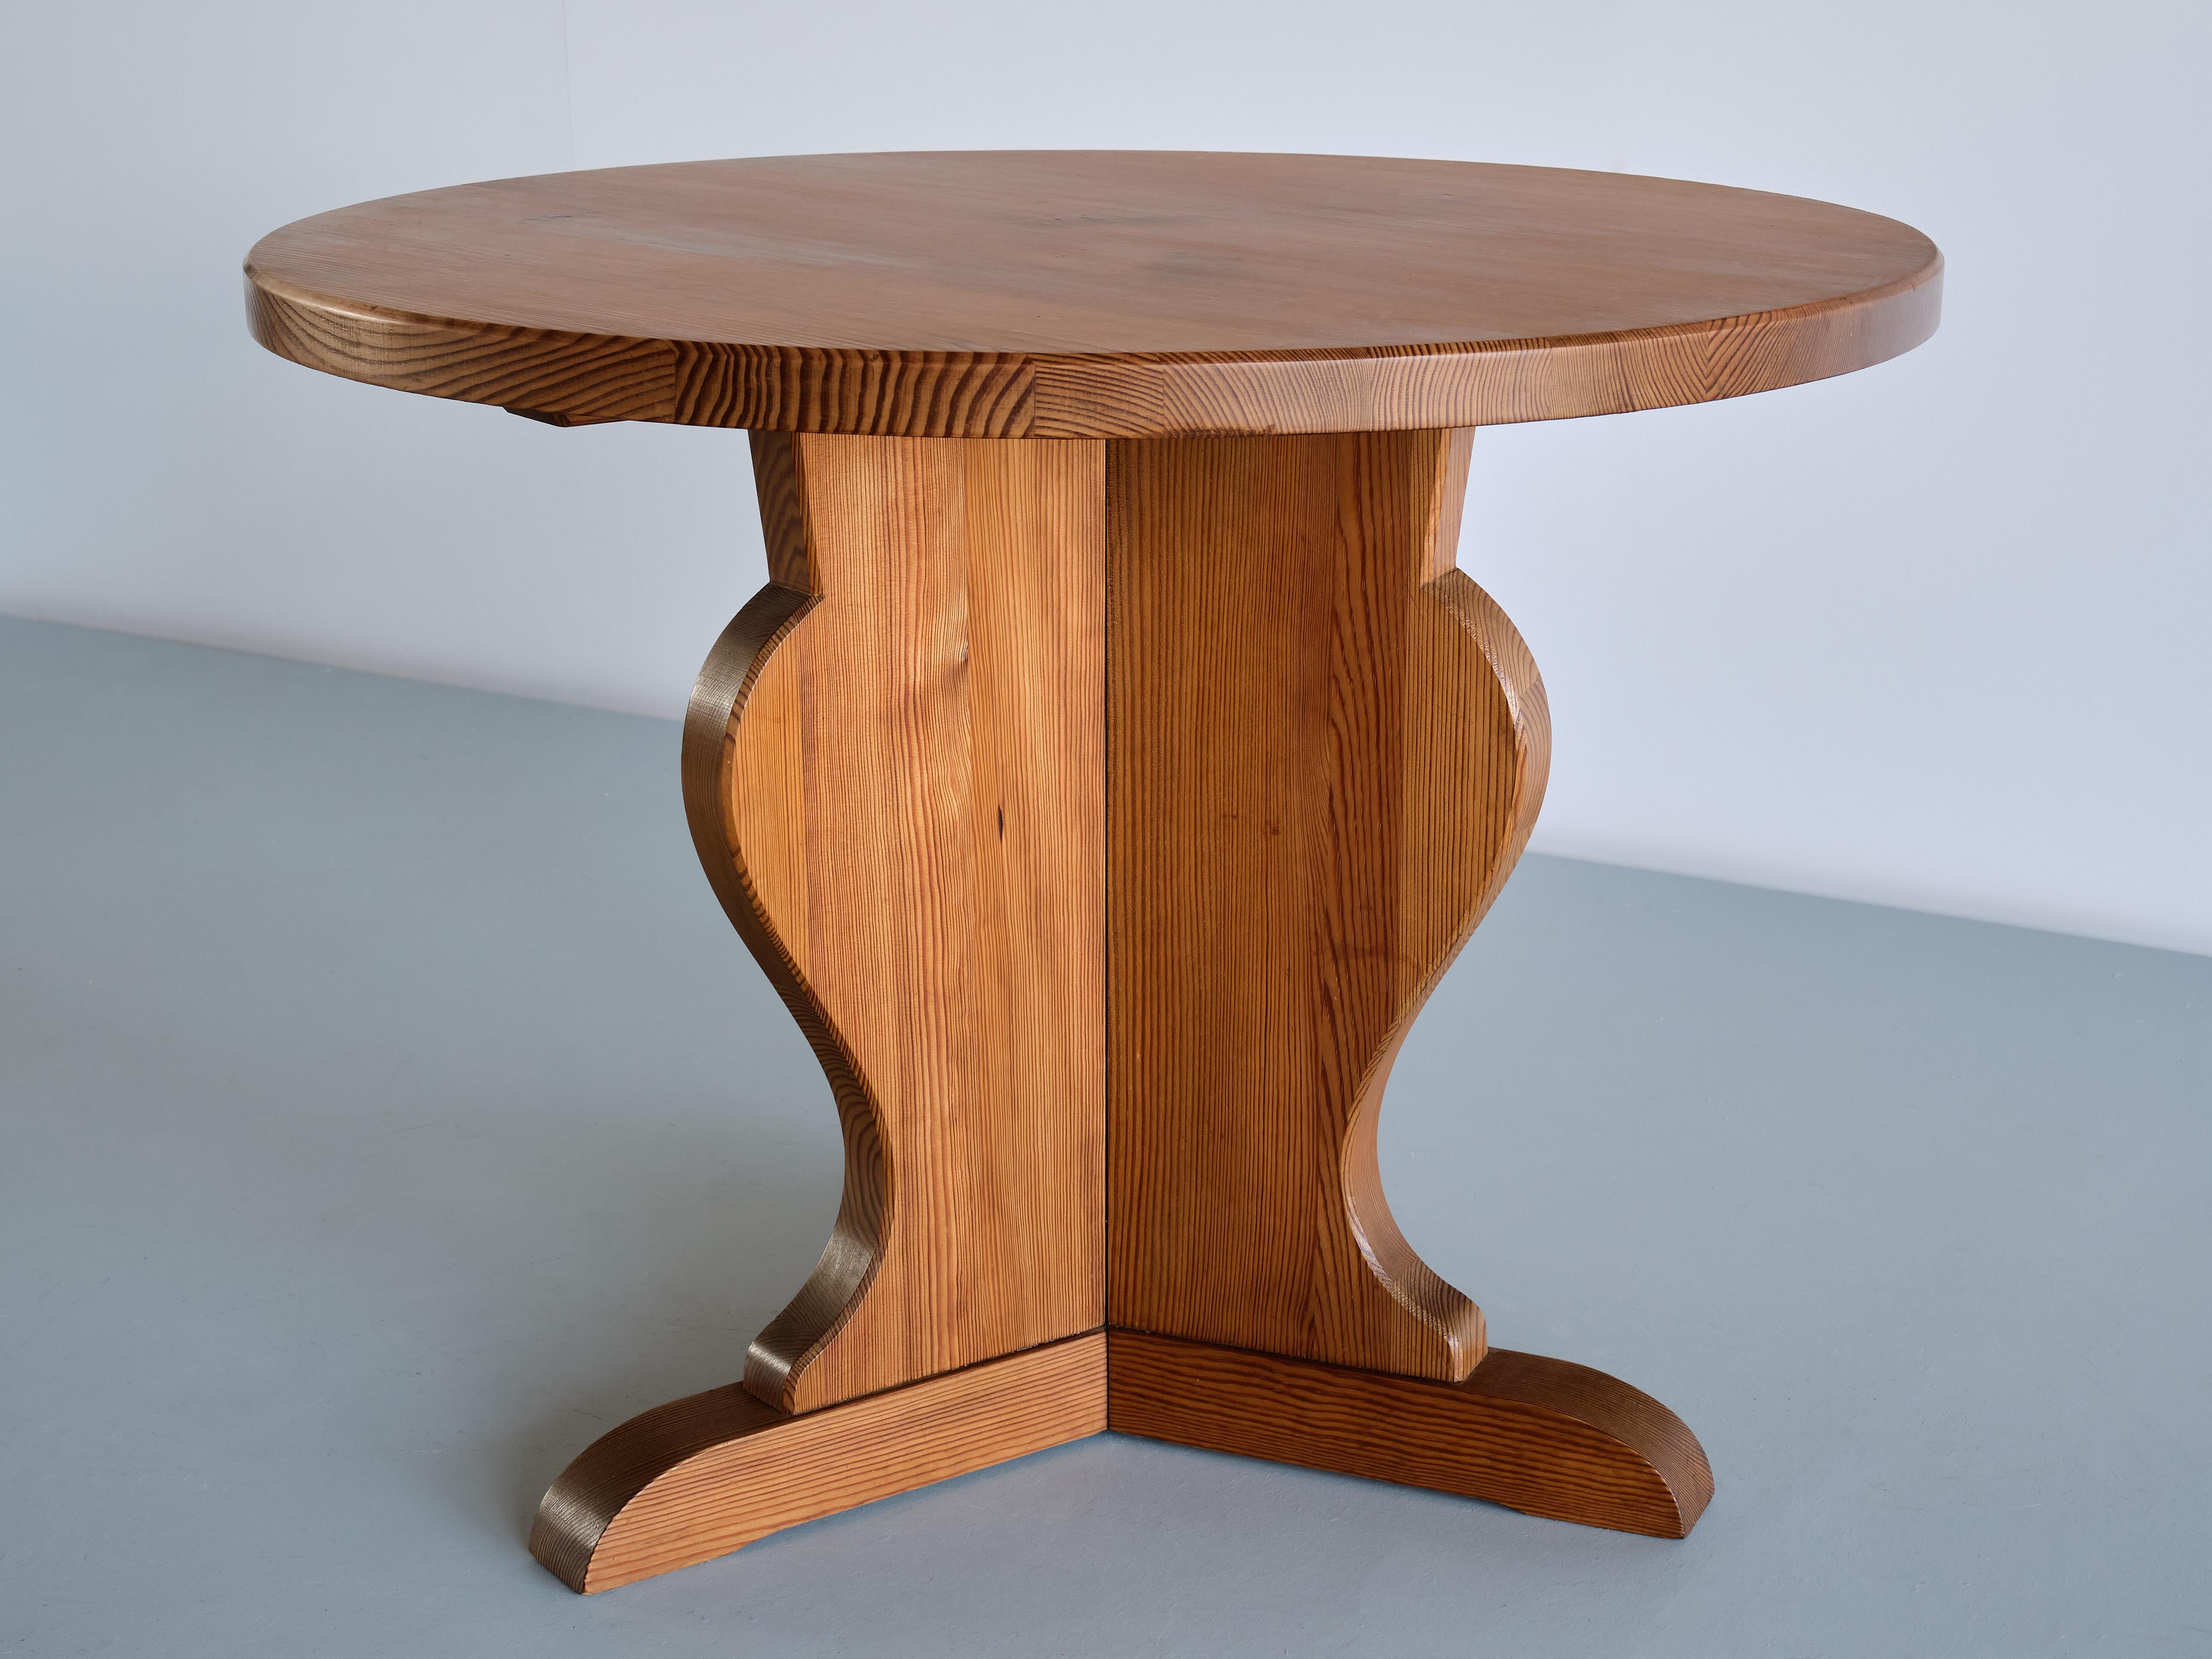 Axel Einar Hjorth 'Lovö' Occasional Table in Pine, Nordiska Kompaniet, 1930s 1